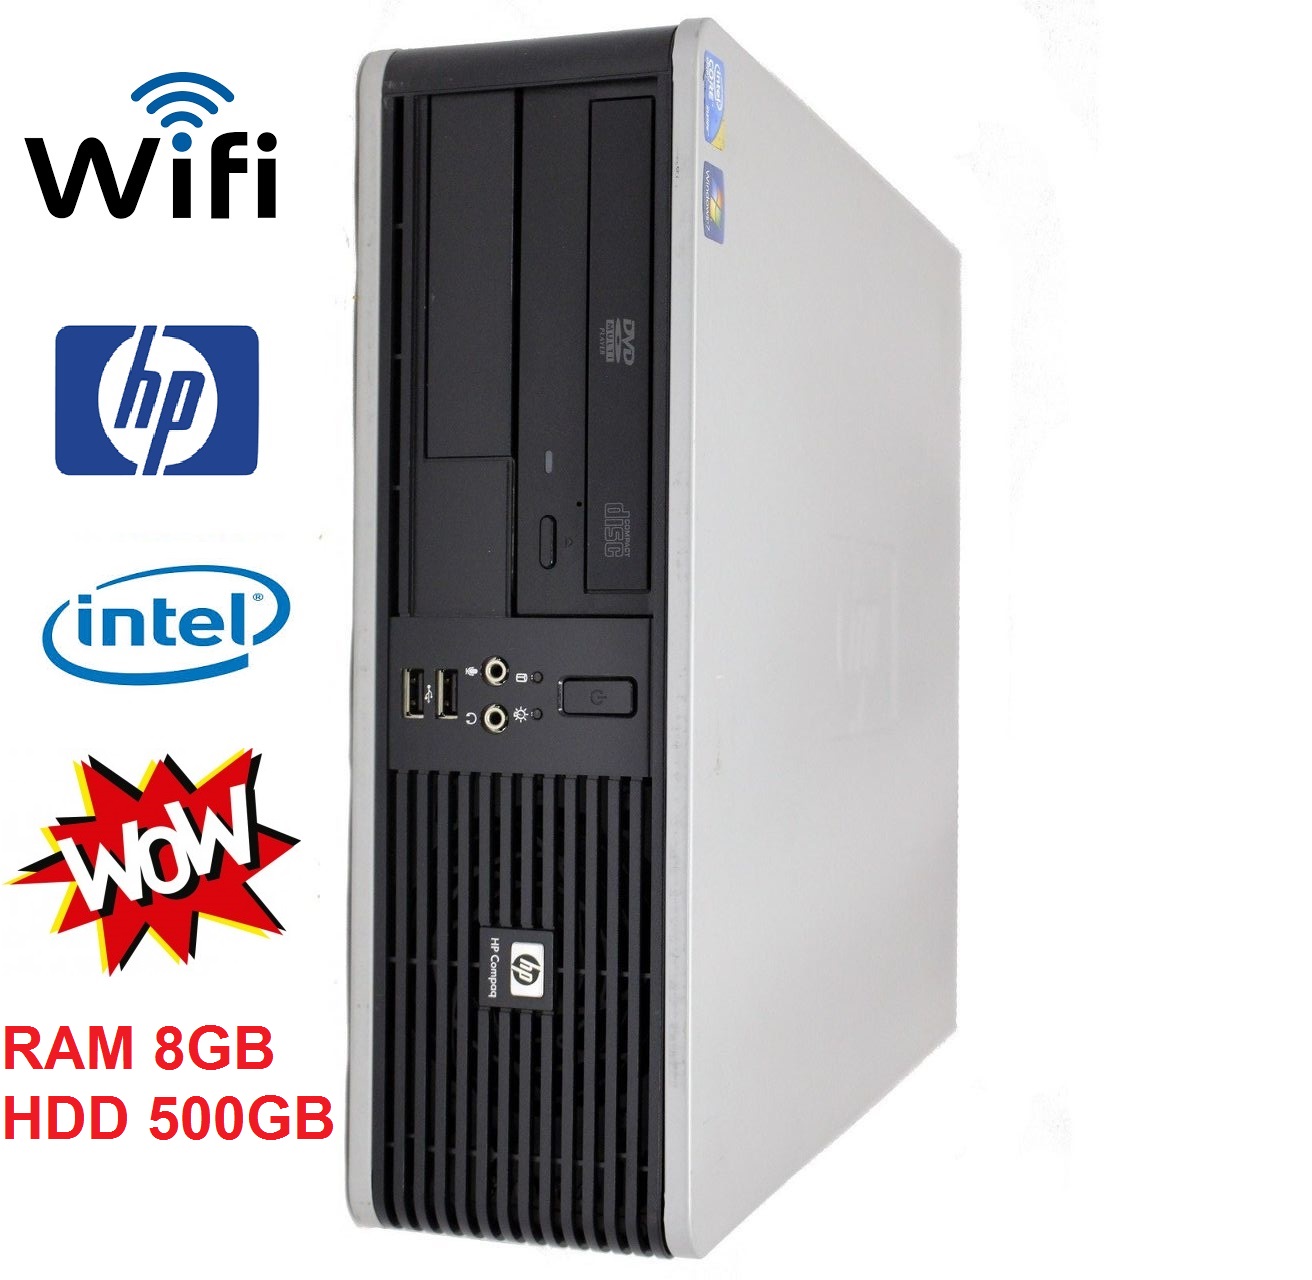 HP Compaq dc7900 Small Form Factor PC CPU intel E8400 3.0GHz RAM 8GB HDD 500GB Wi-Fi